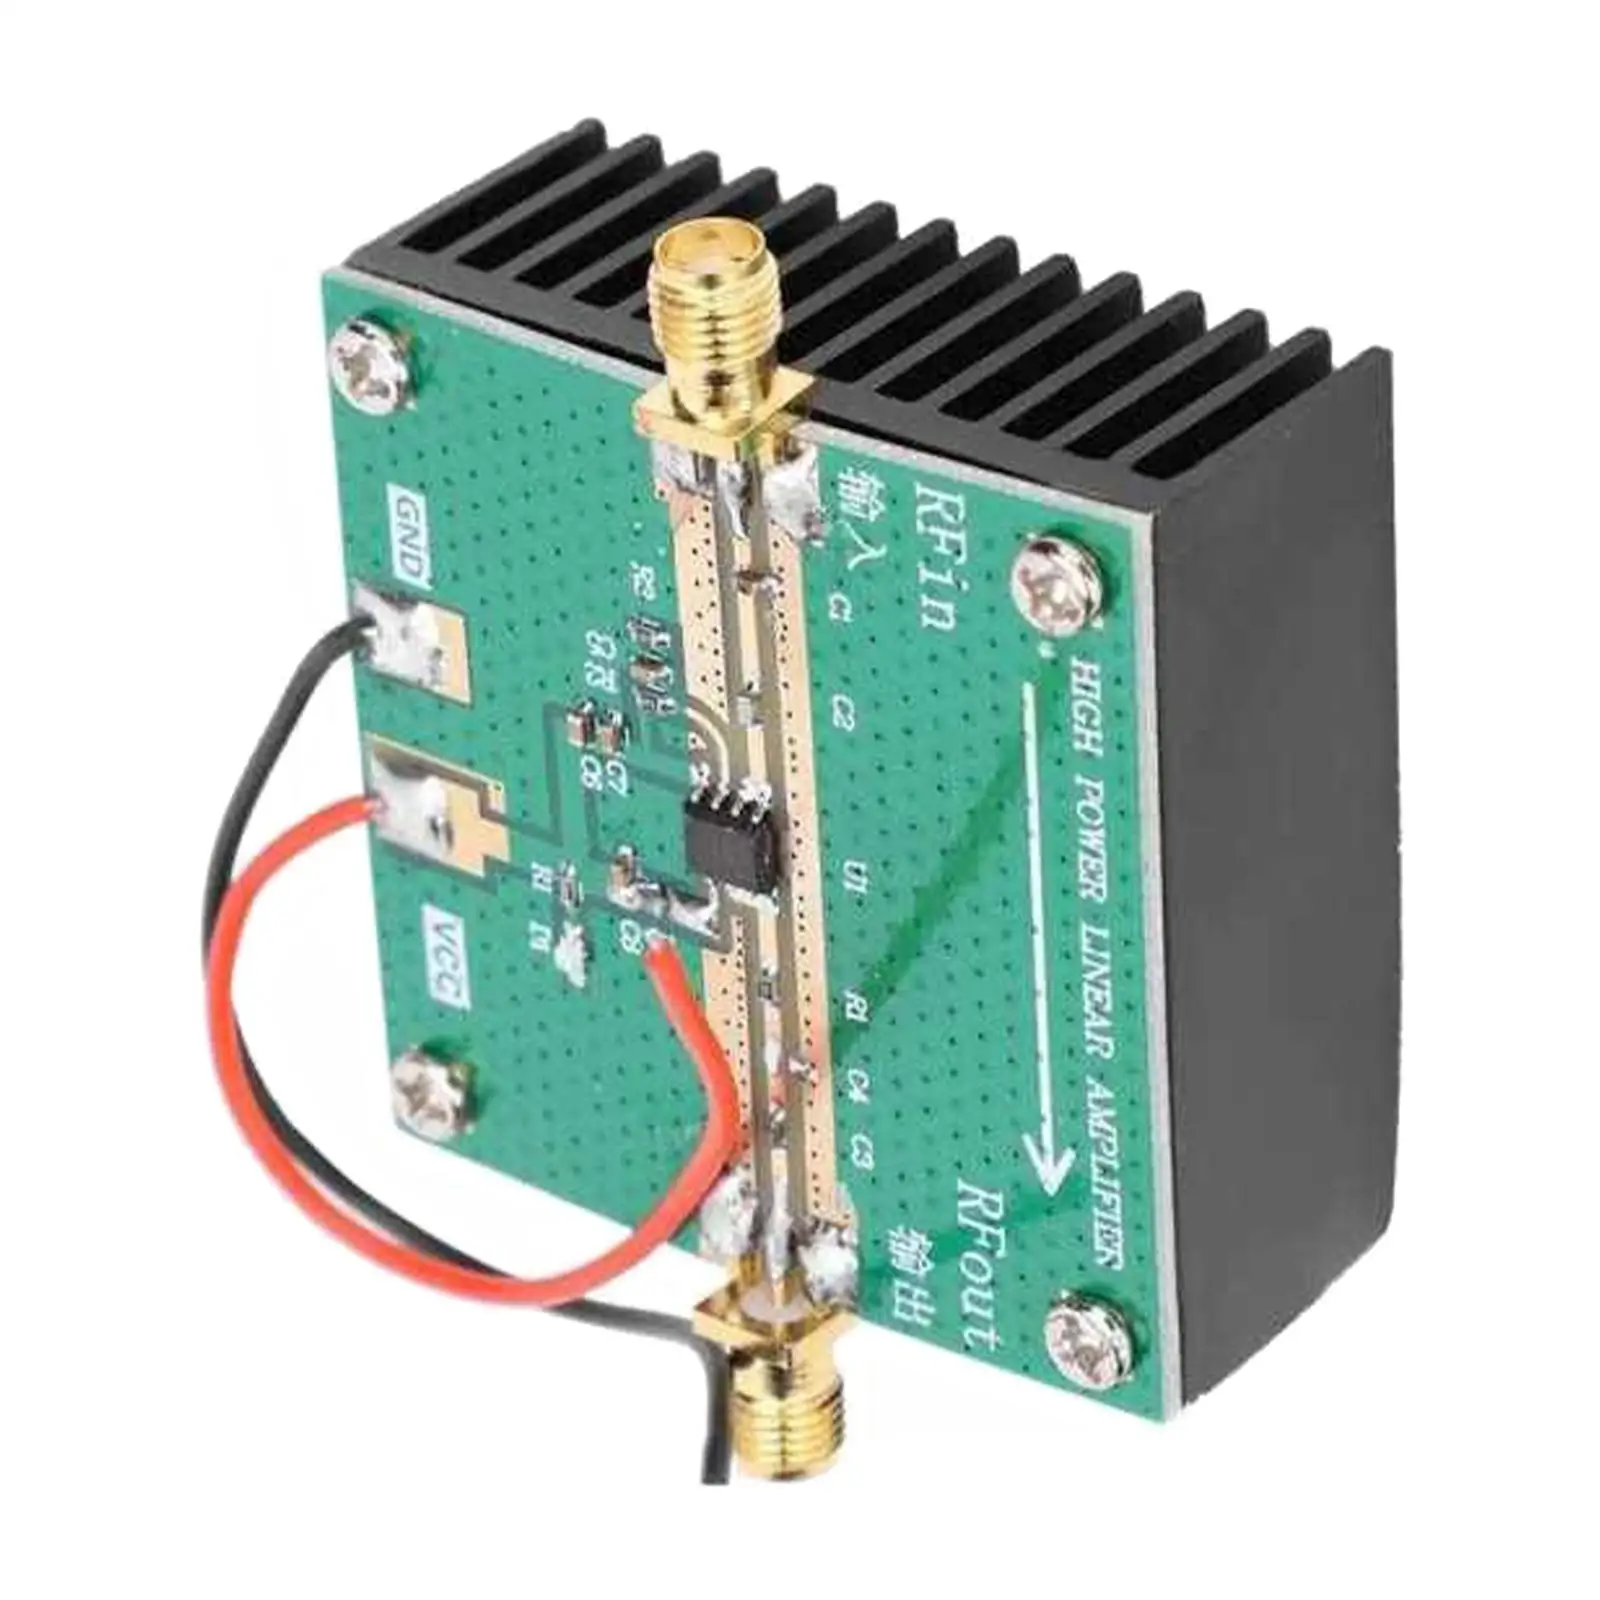 RF Power Amplifier Operating 400-2700 RF Logarithmic for Ham Radio